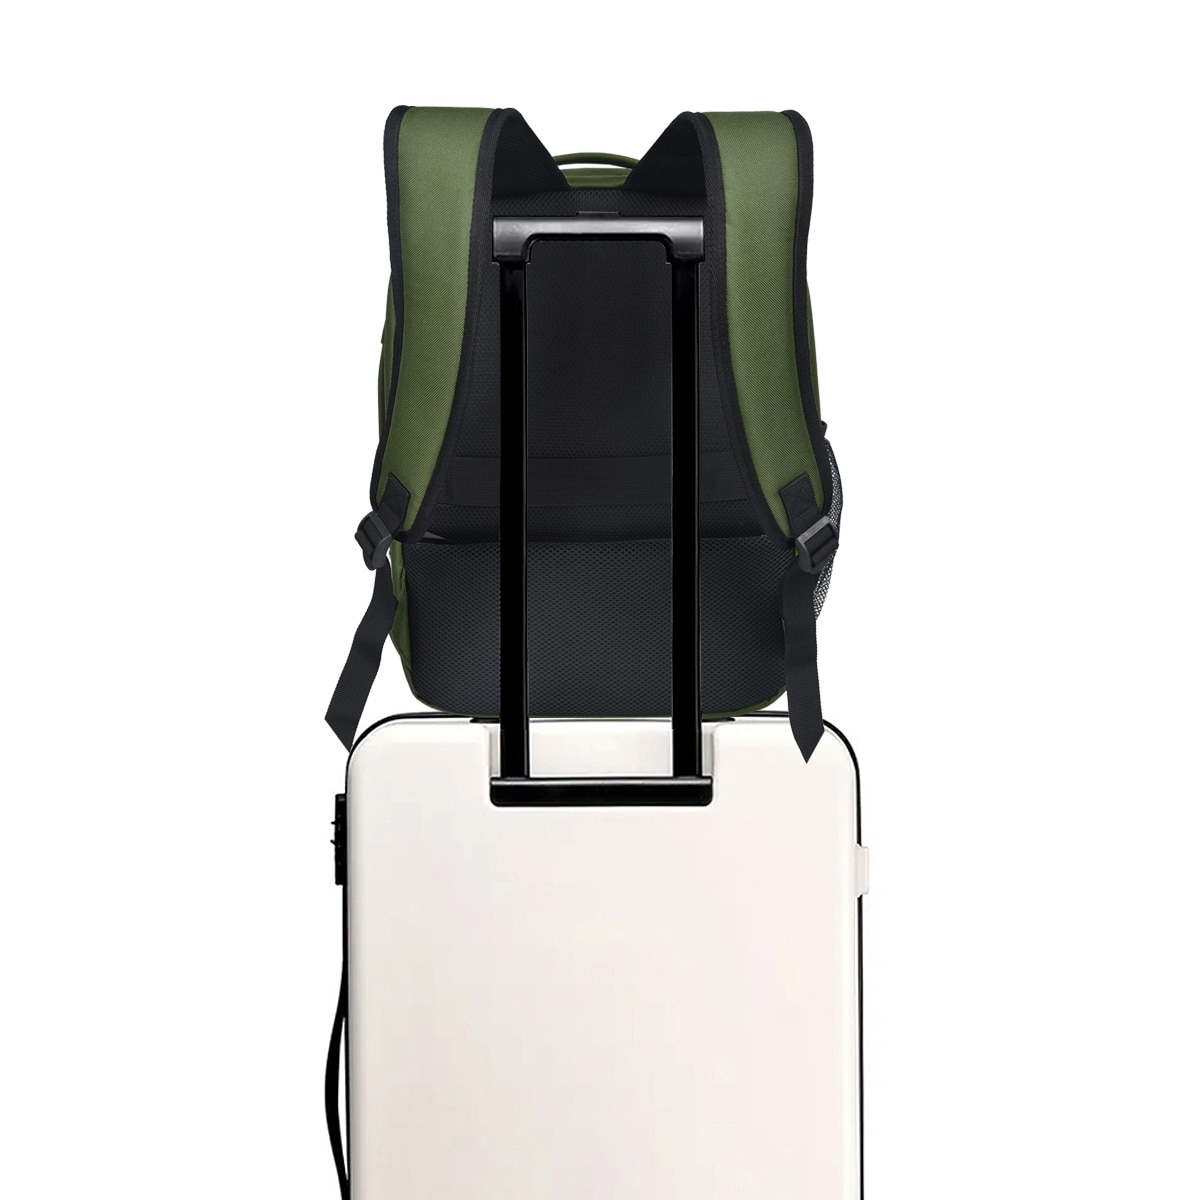 CabinFly Pacamker Wizzair Backpack 40x30x20 cm Cabin Bag Transavia